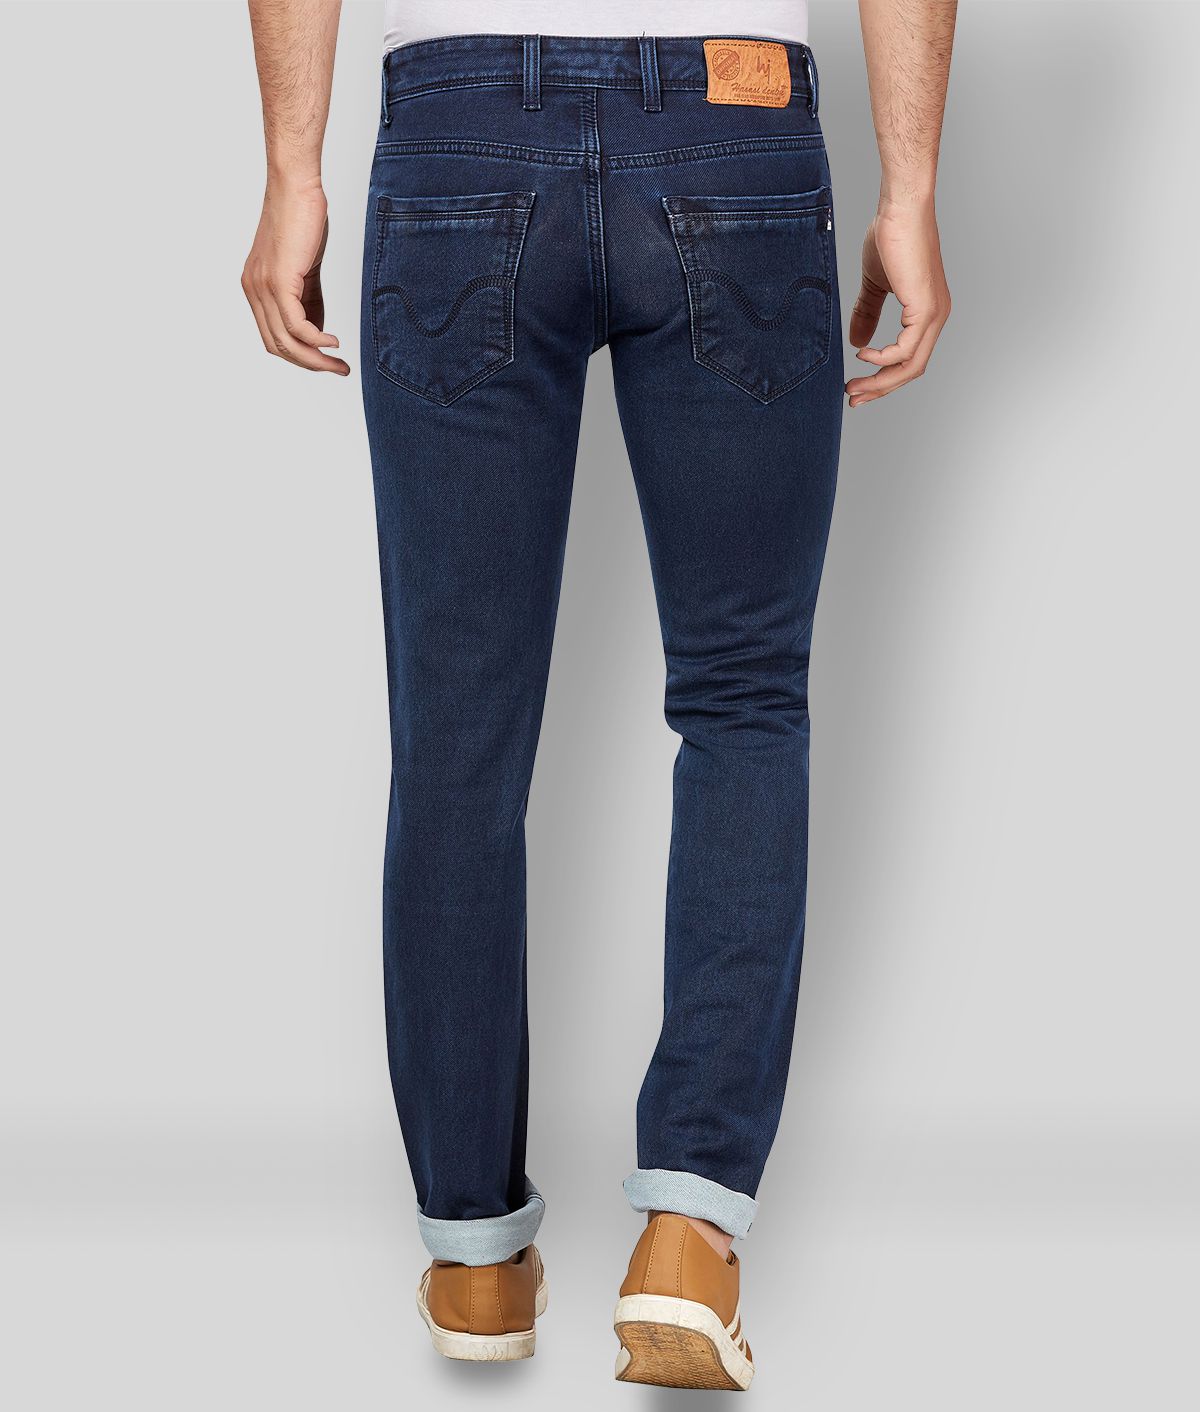 Buy Hasasi Denim - Navy Blue 100% Cotton Regular Fit Men's Jeans ( Pack ...